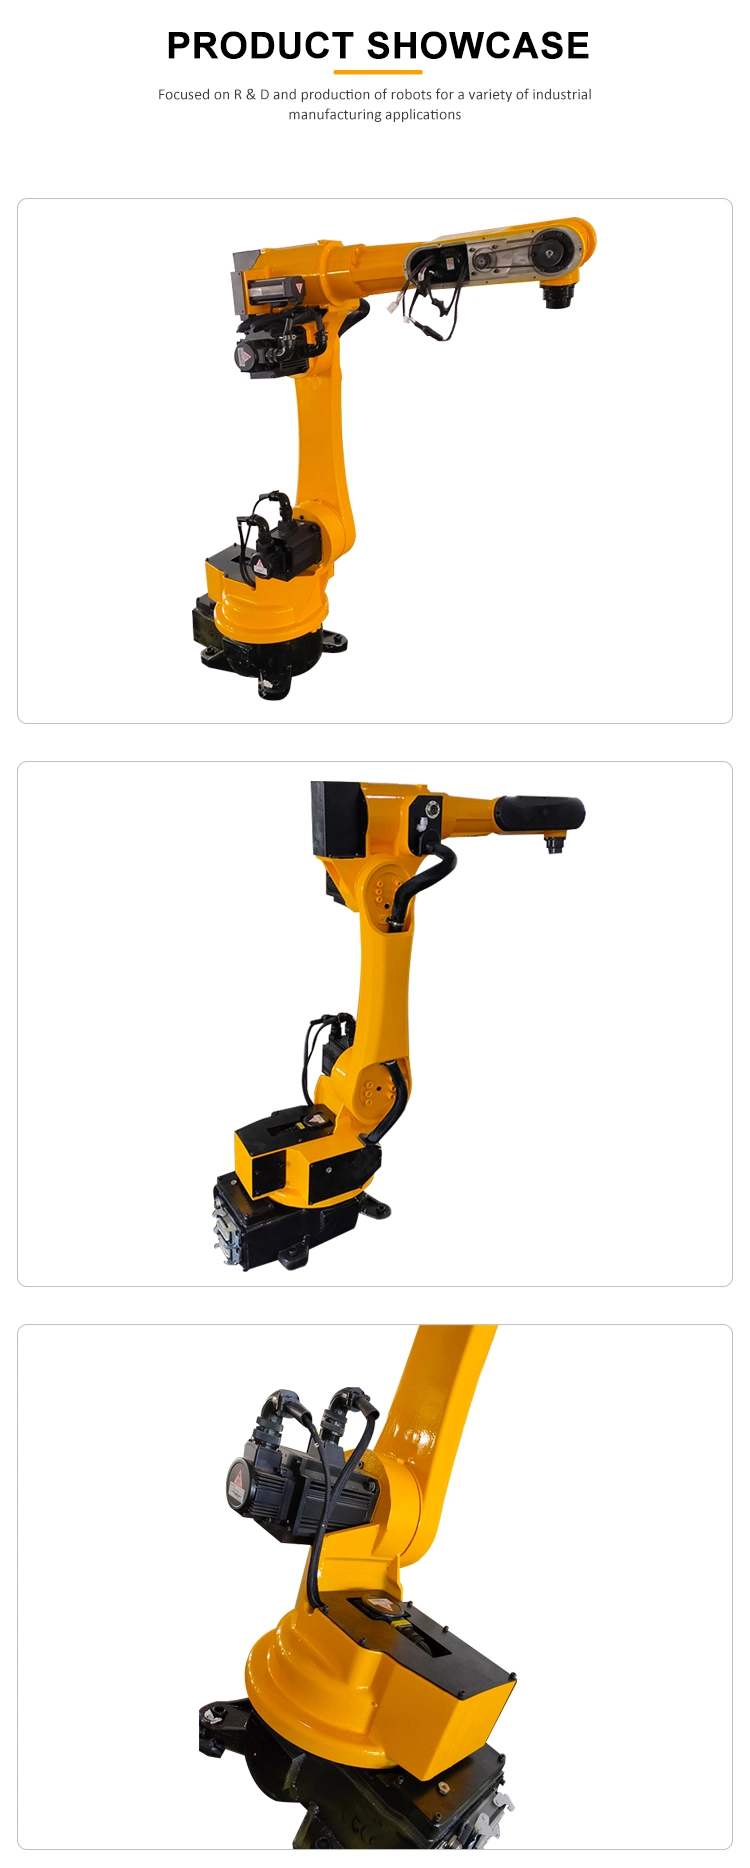 6 Axis CNC Manipulator 6dof Robot Arm Machine Cheap Robotic Arm for Industrial Robot